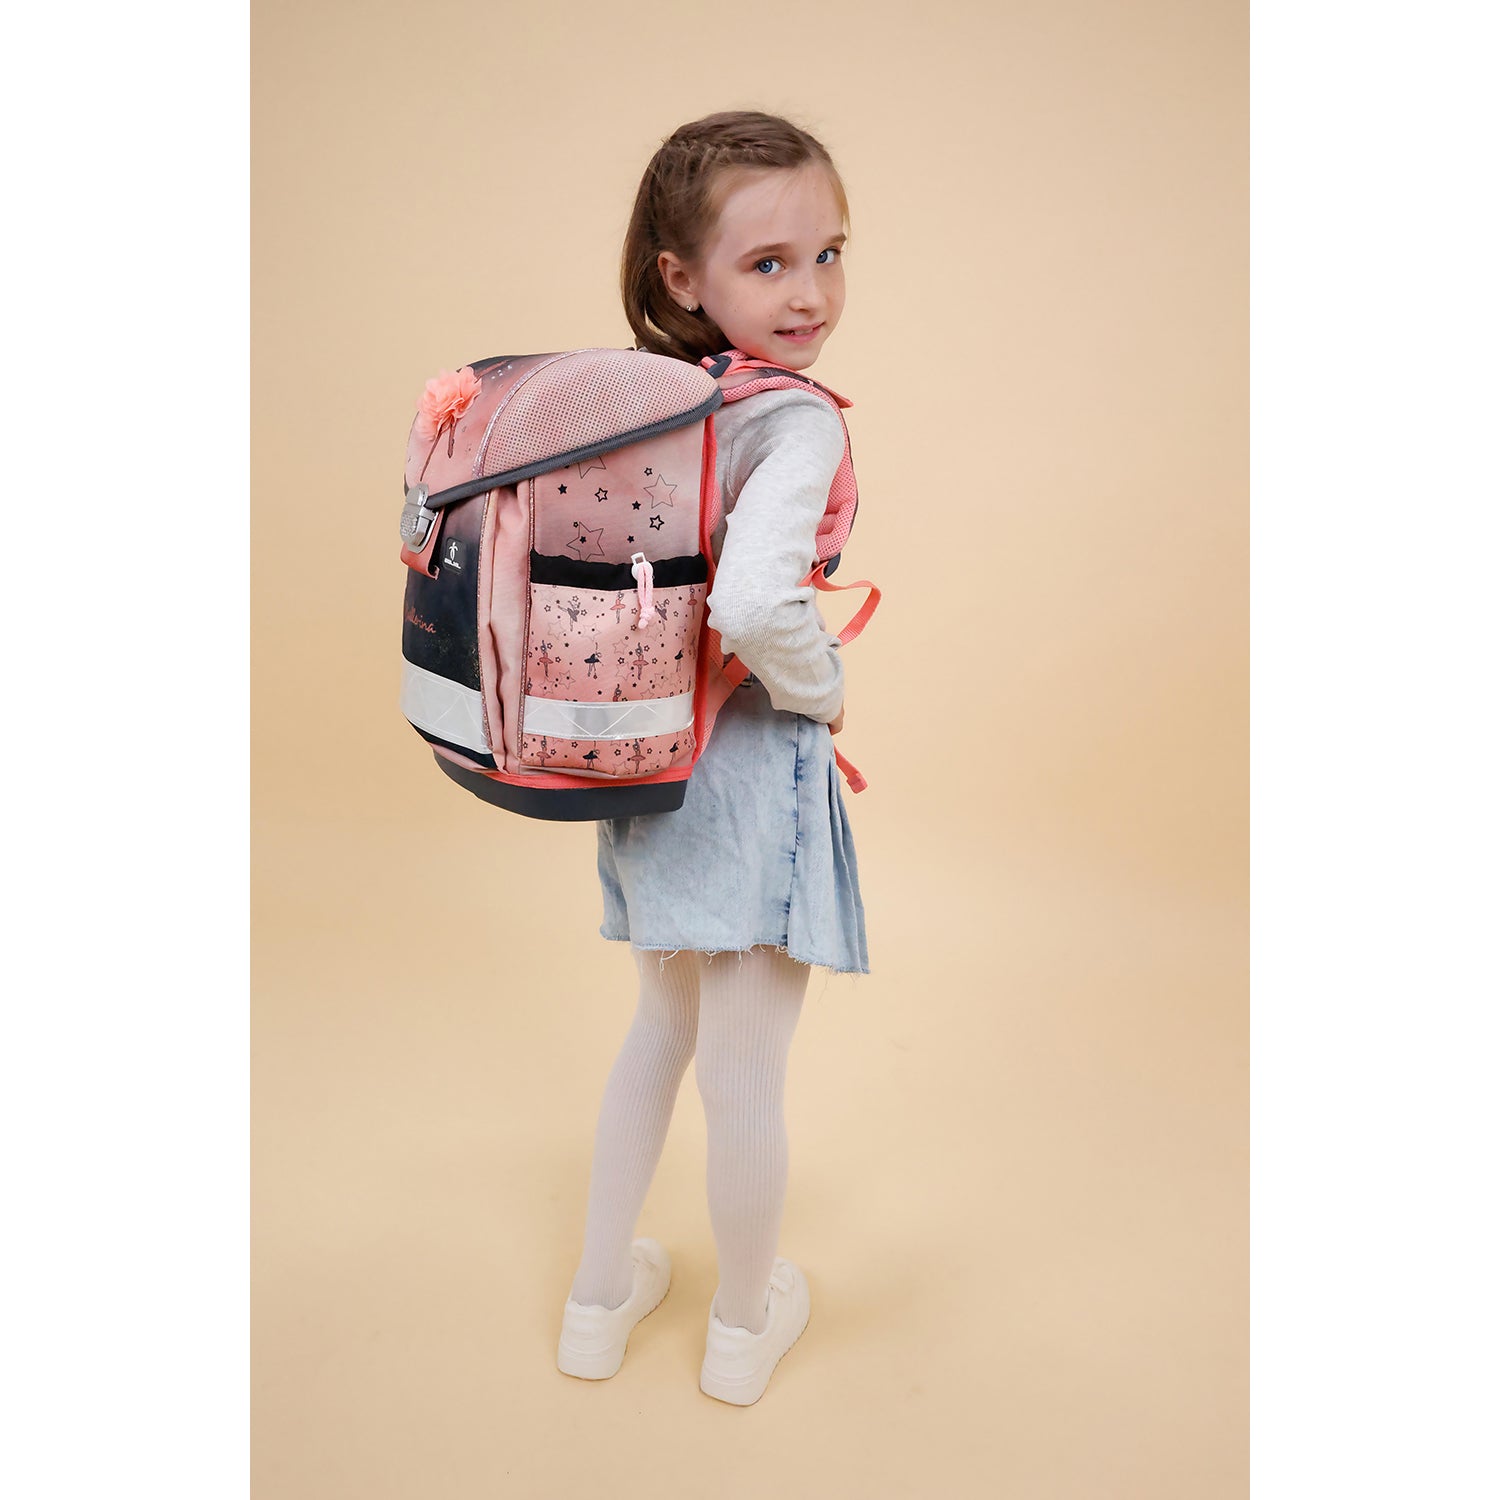 Classy Ballerina Black Pink schoolbag set 4 pcs